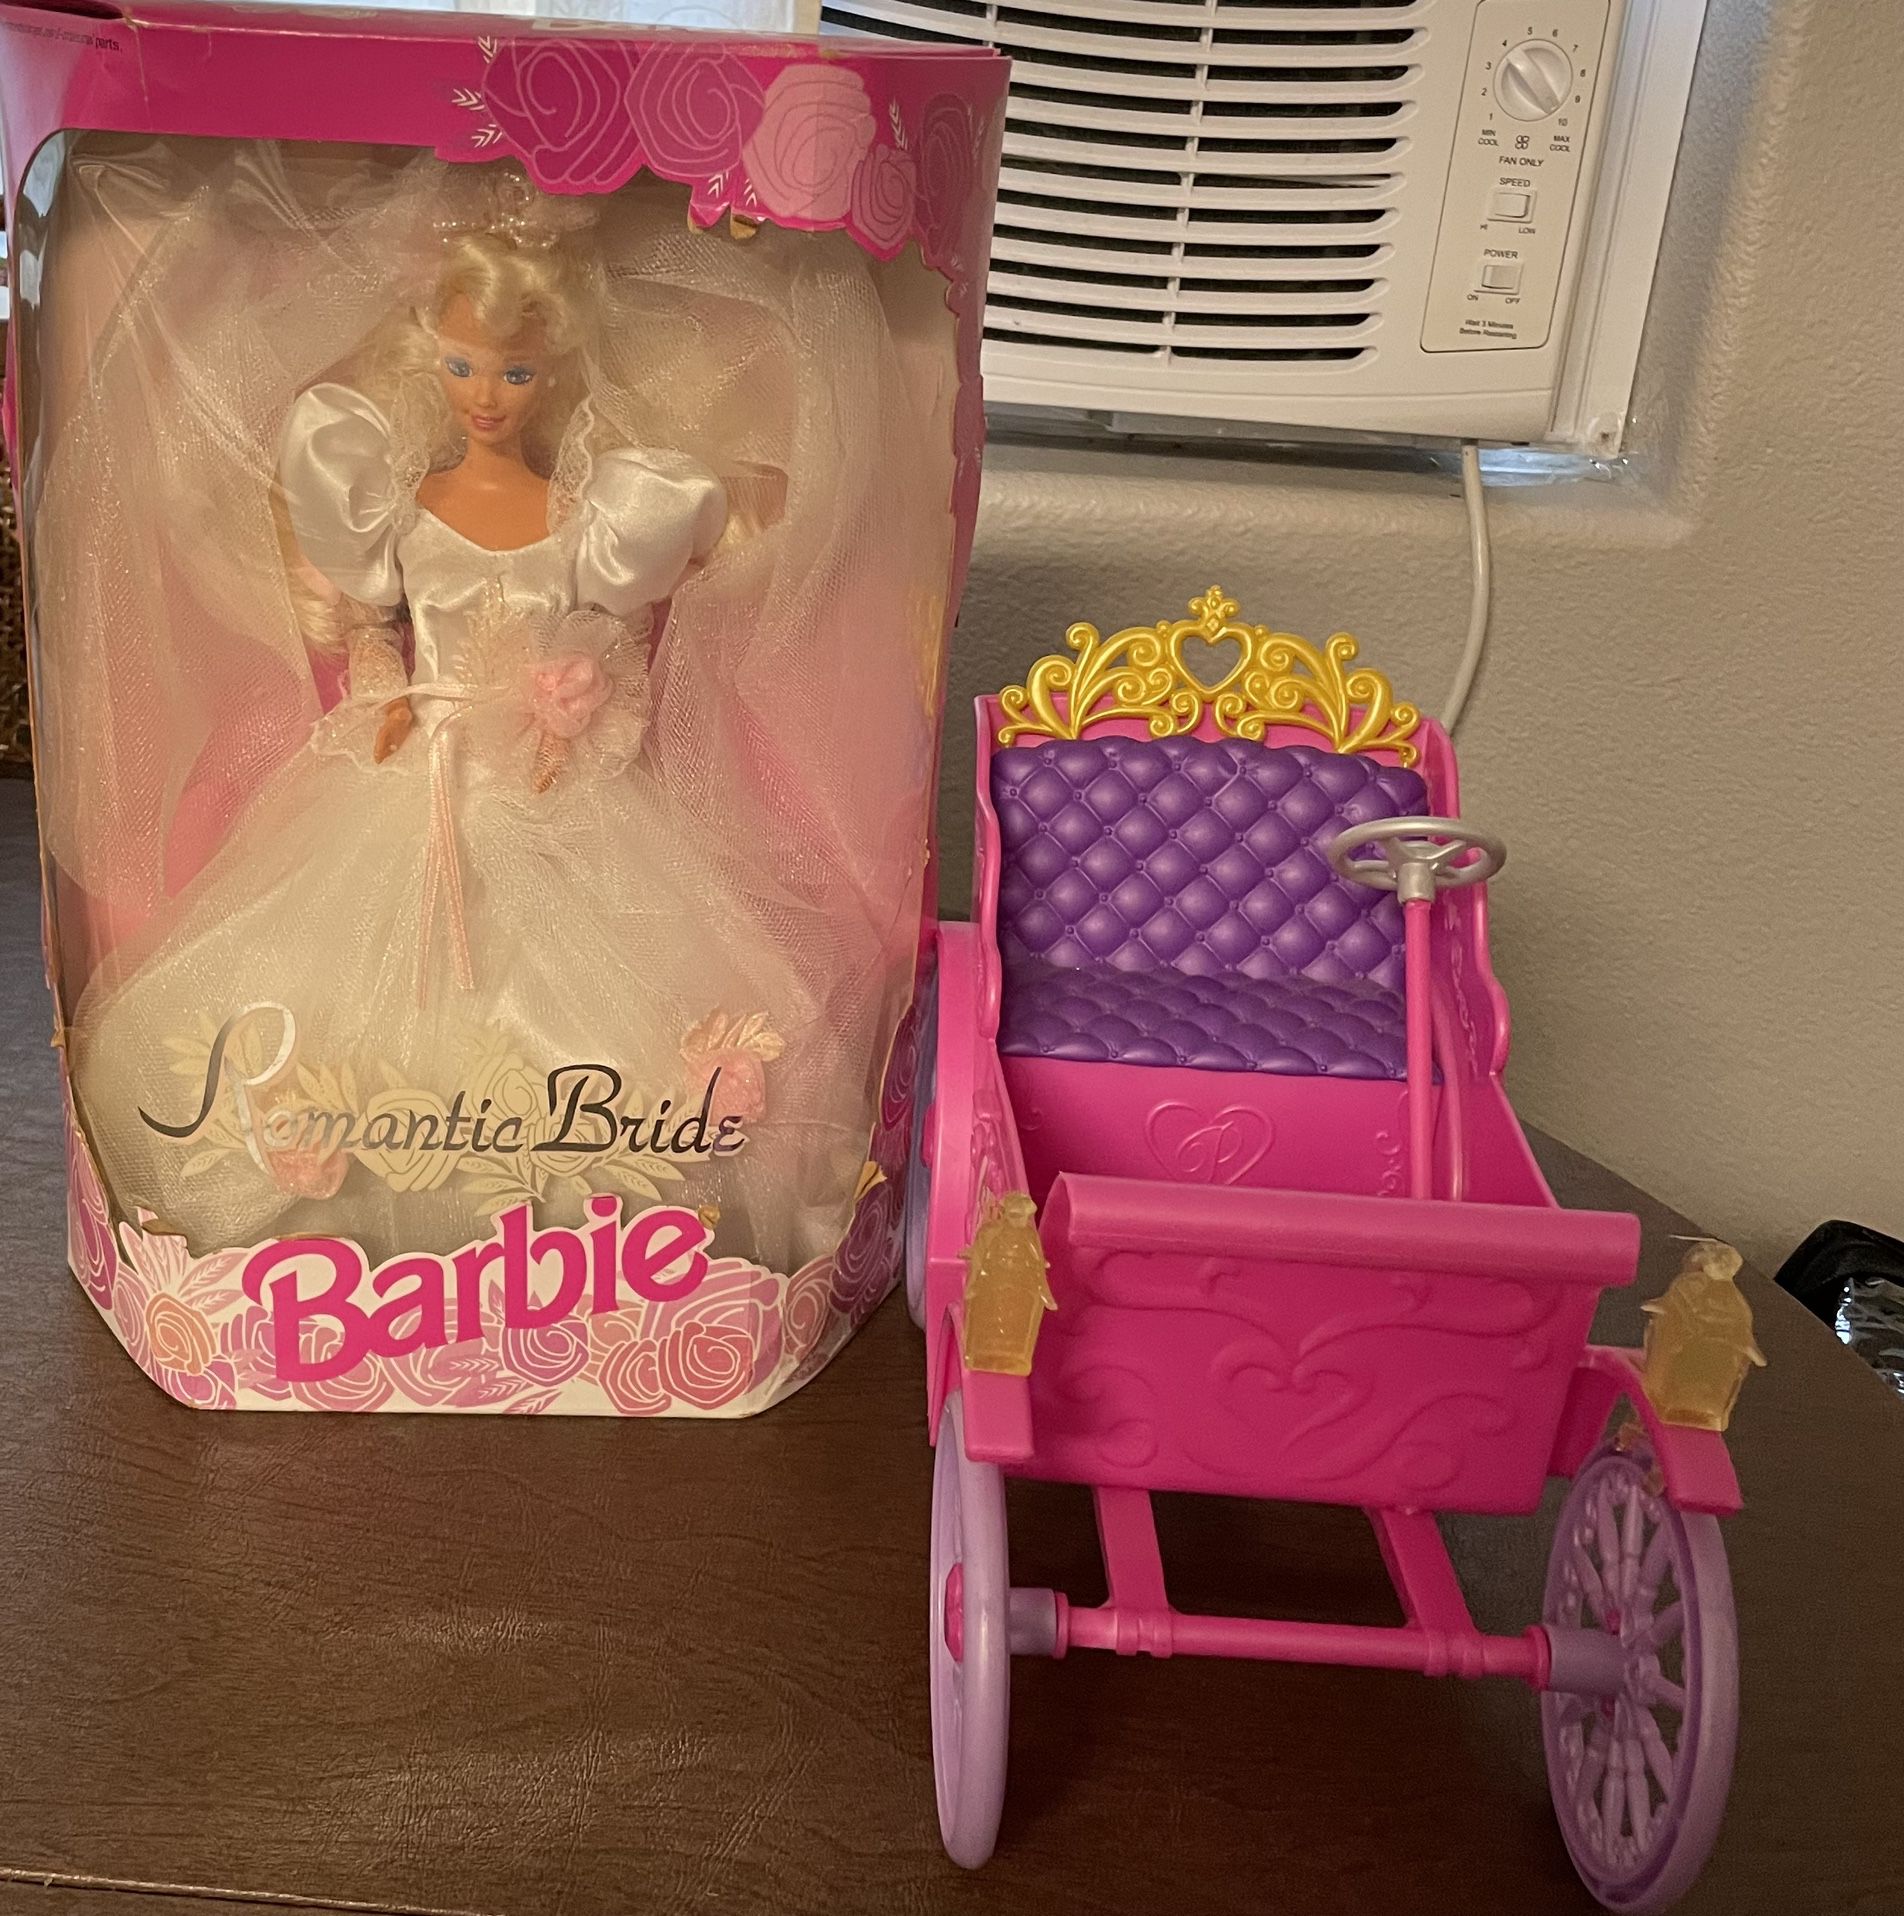 Romantic Bride Barbie-1992 and Disney Princess Royal Car Vehicle